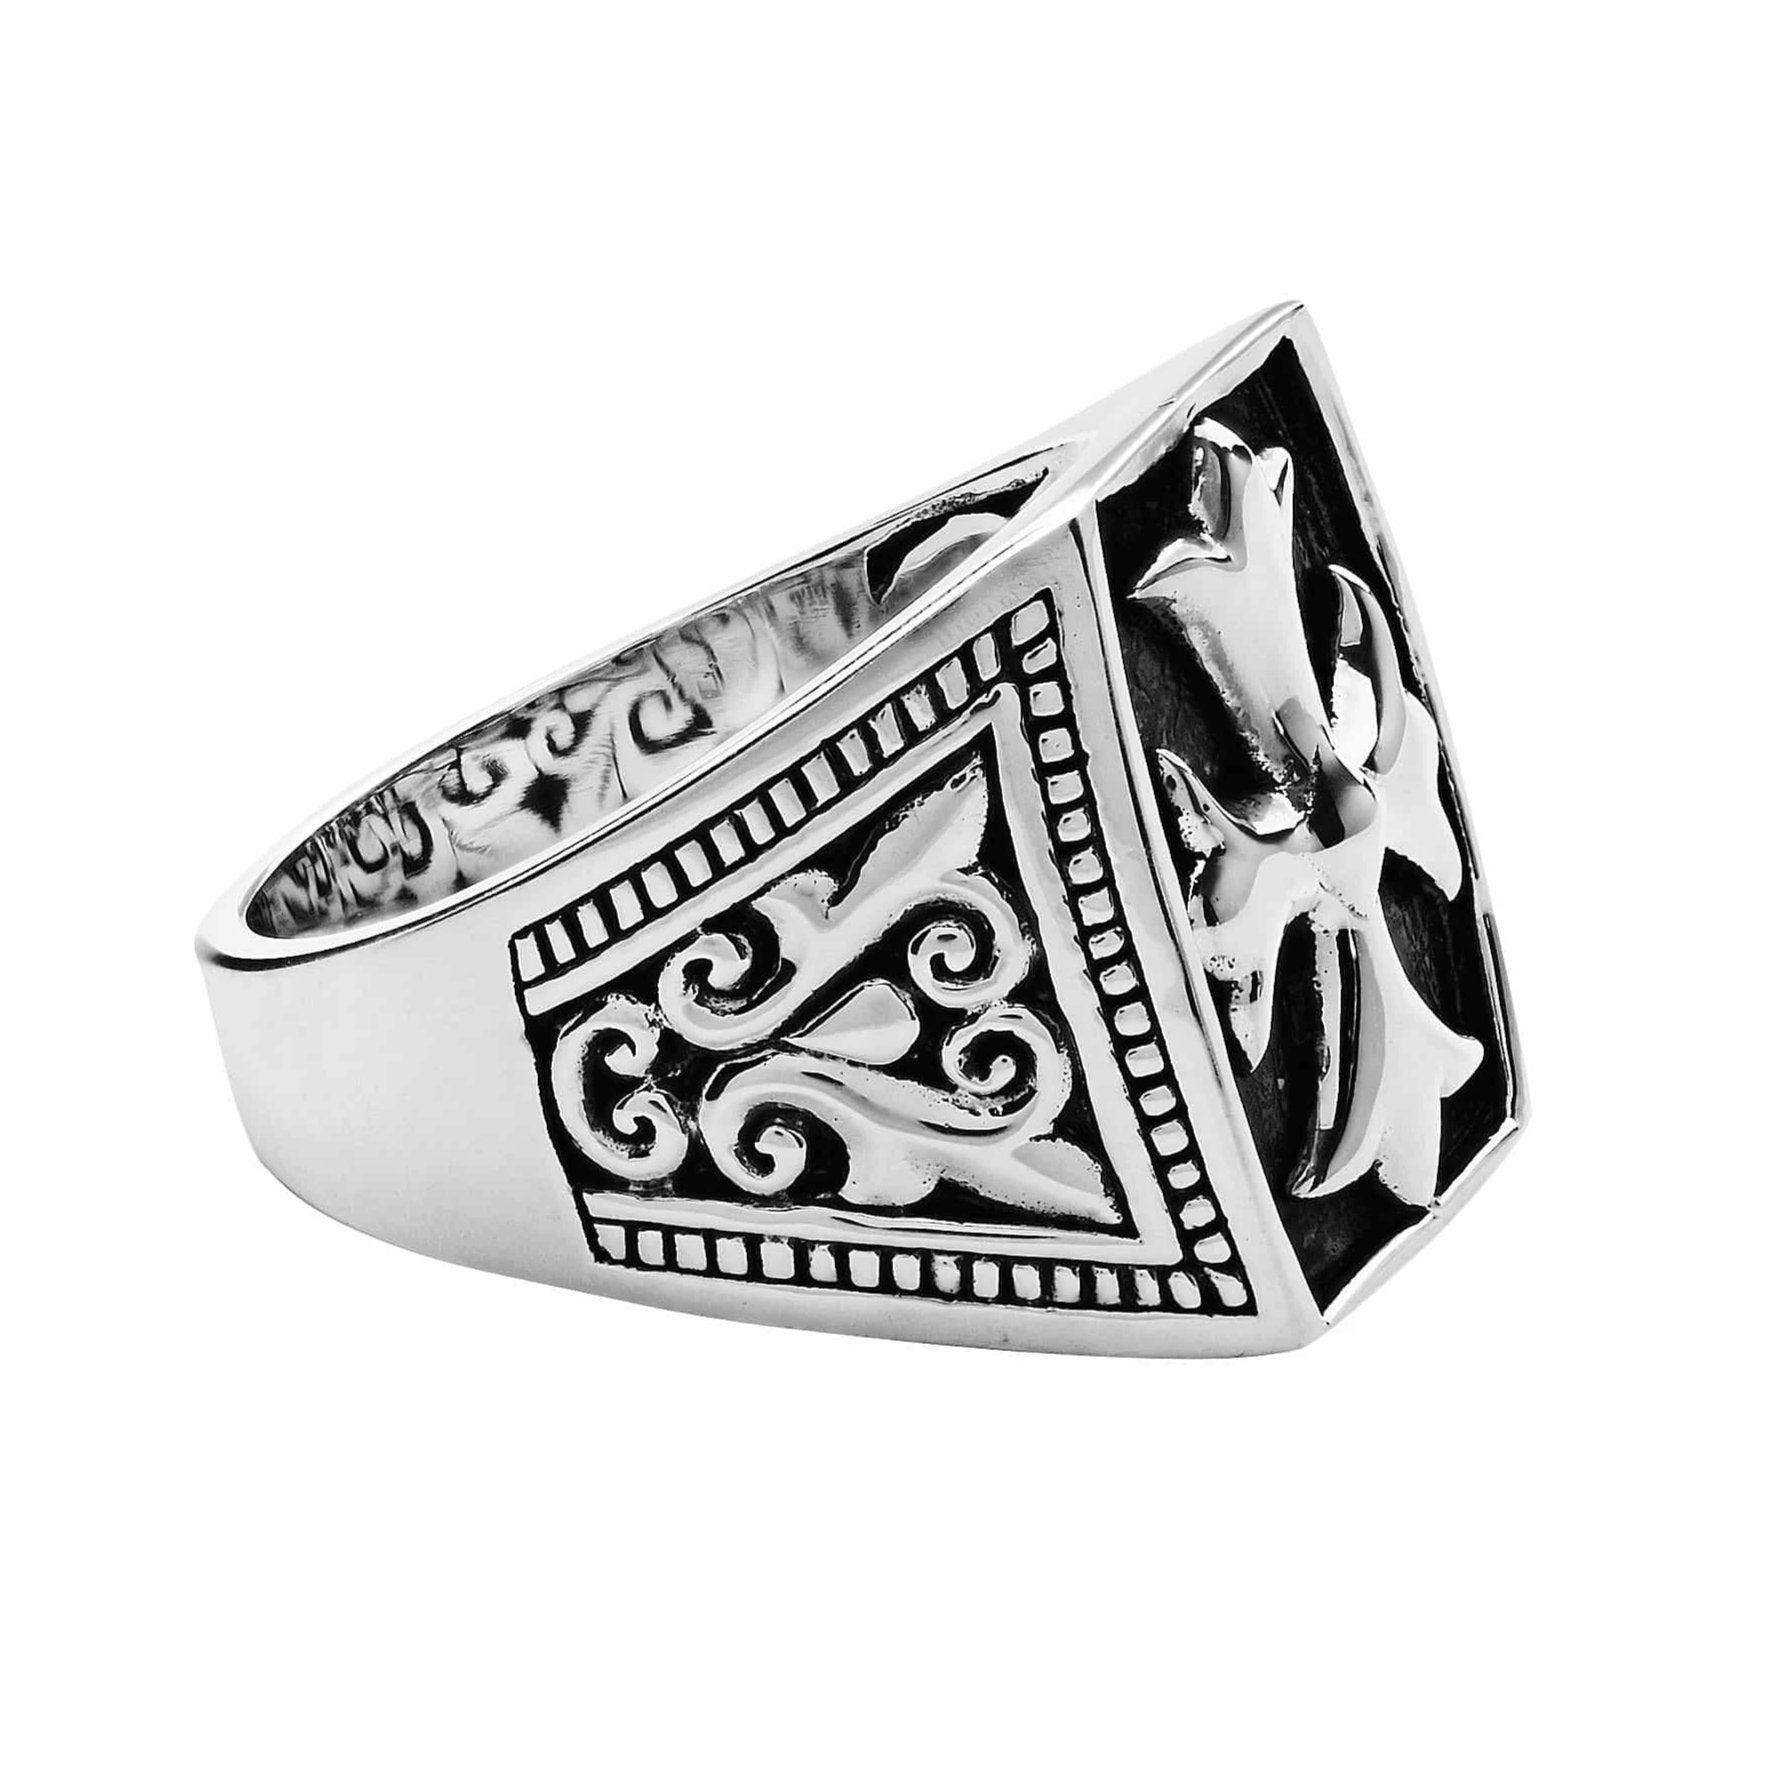 Cross Patonce Ring - Silver Phantom Jewelry